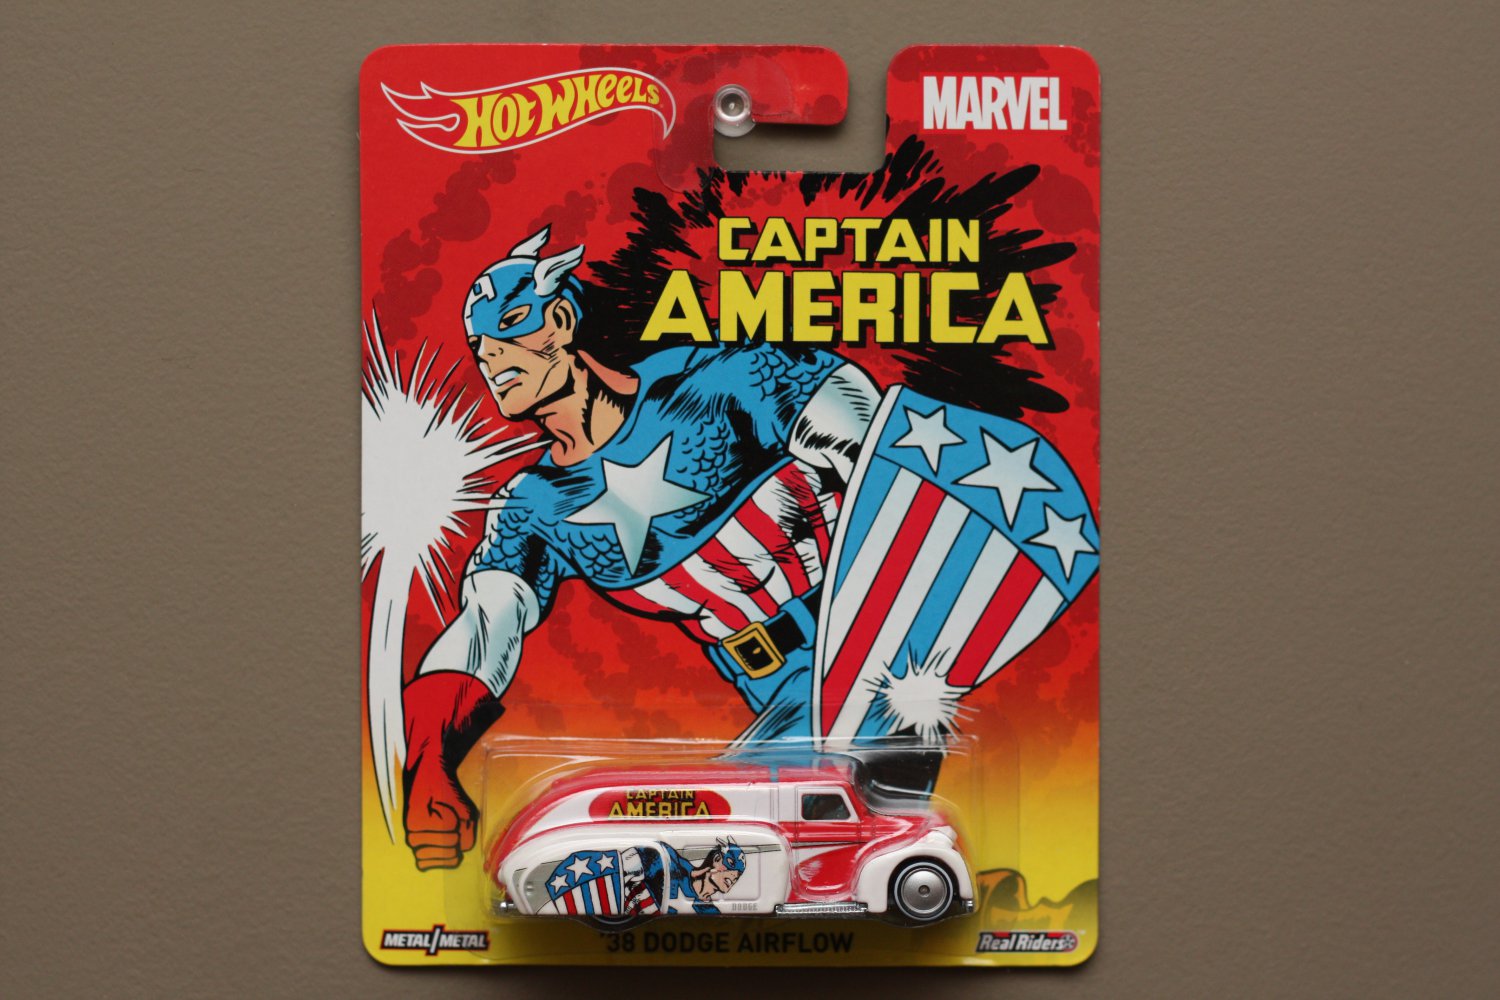 Hot Wheels 2015 Pop Culture Marvel '38 Dodge Airflow (Captain America)